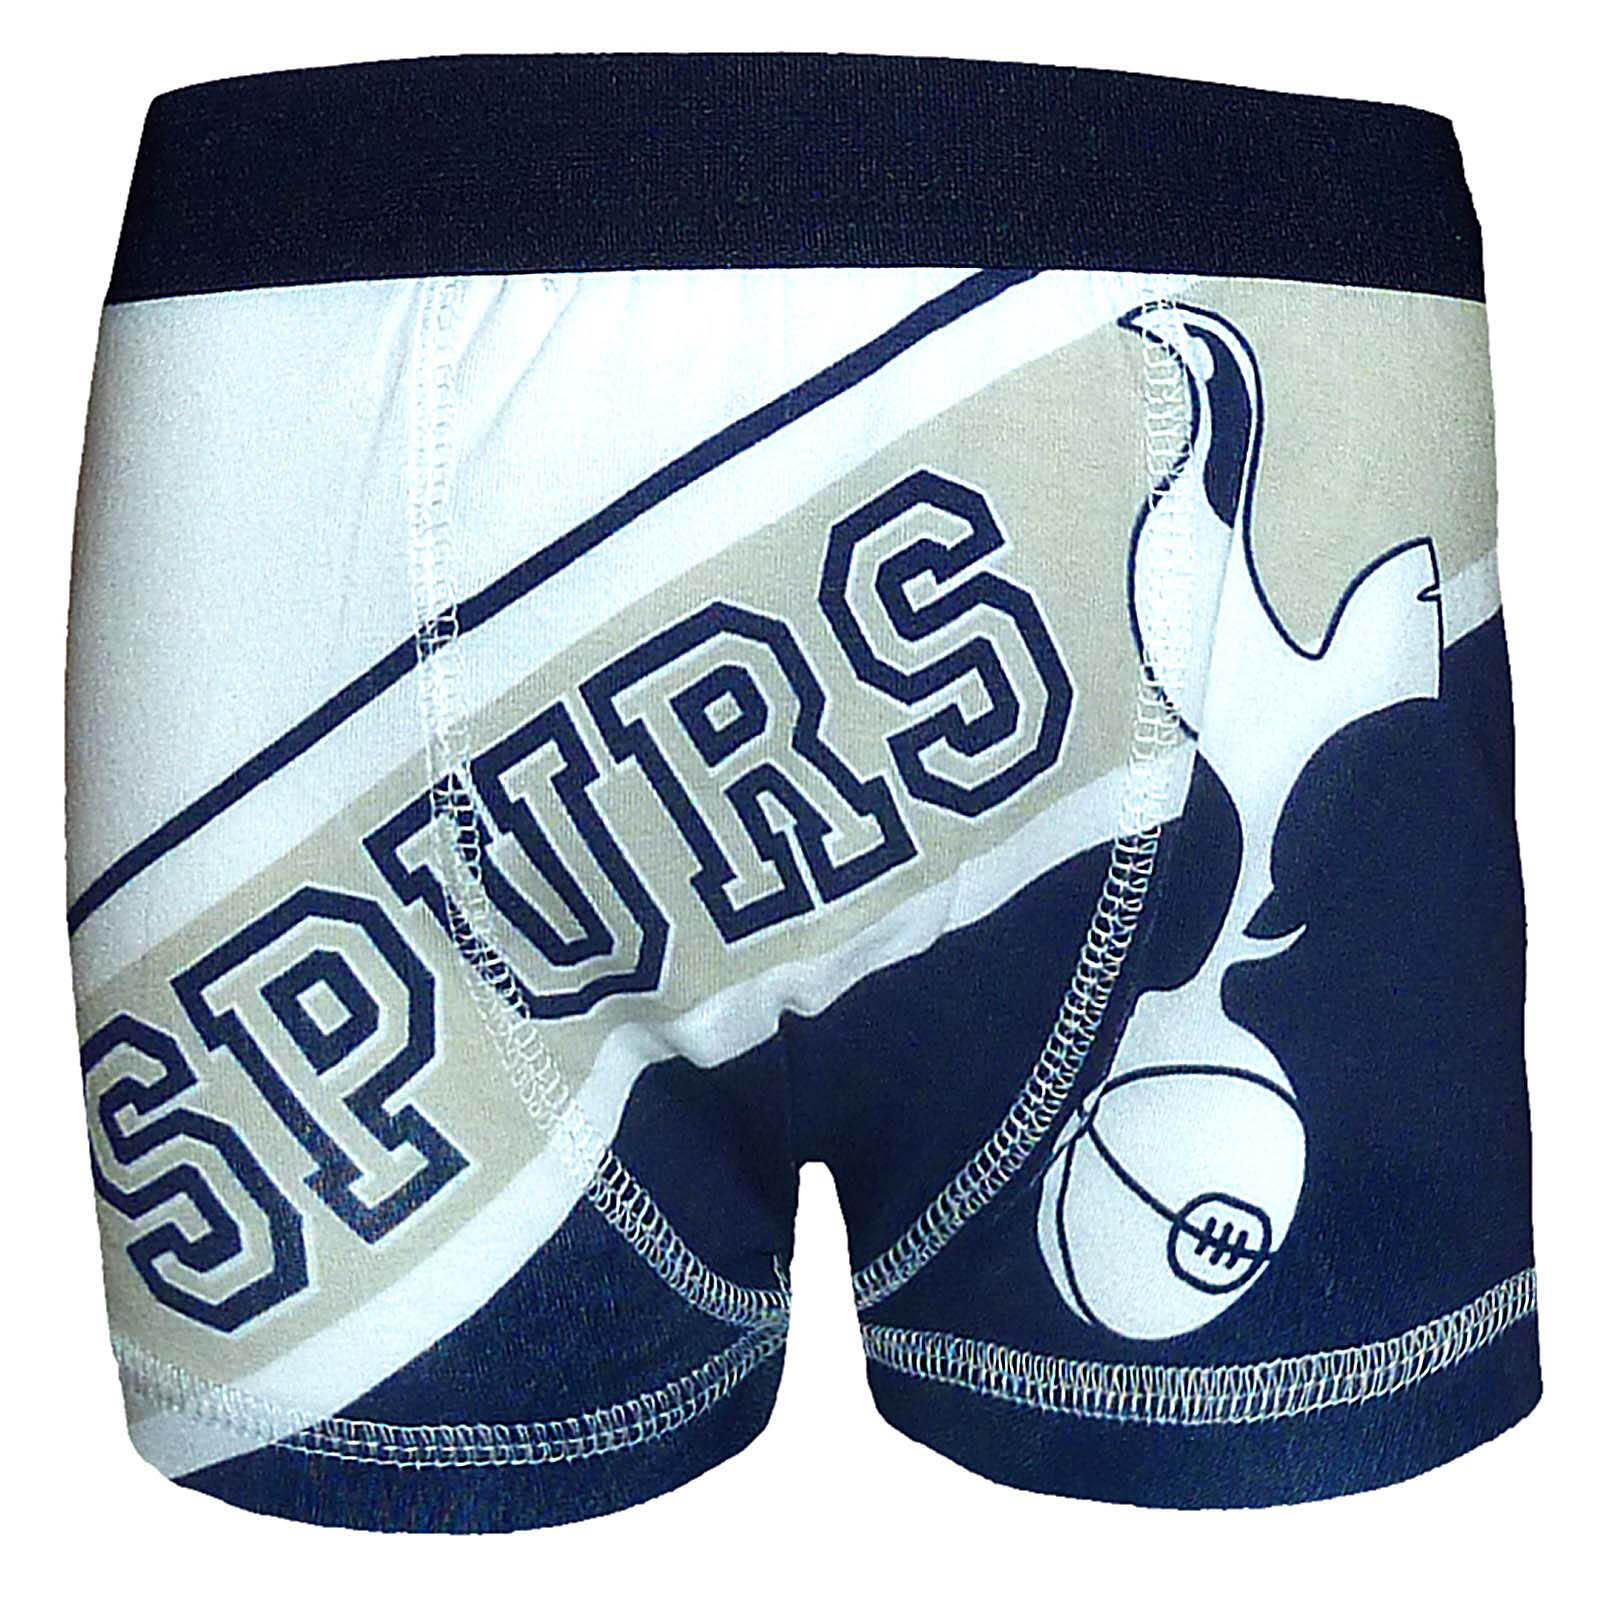 TOTTENHAM HOTSPUR Tottenham Hotspur Boys Boxer Shorts 1 Pack OFFICIAL Football Gift